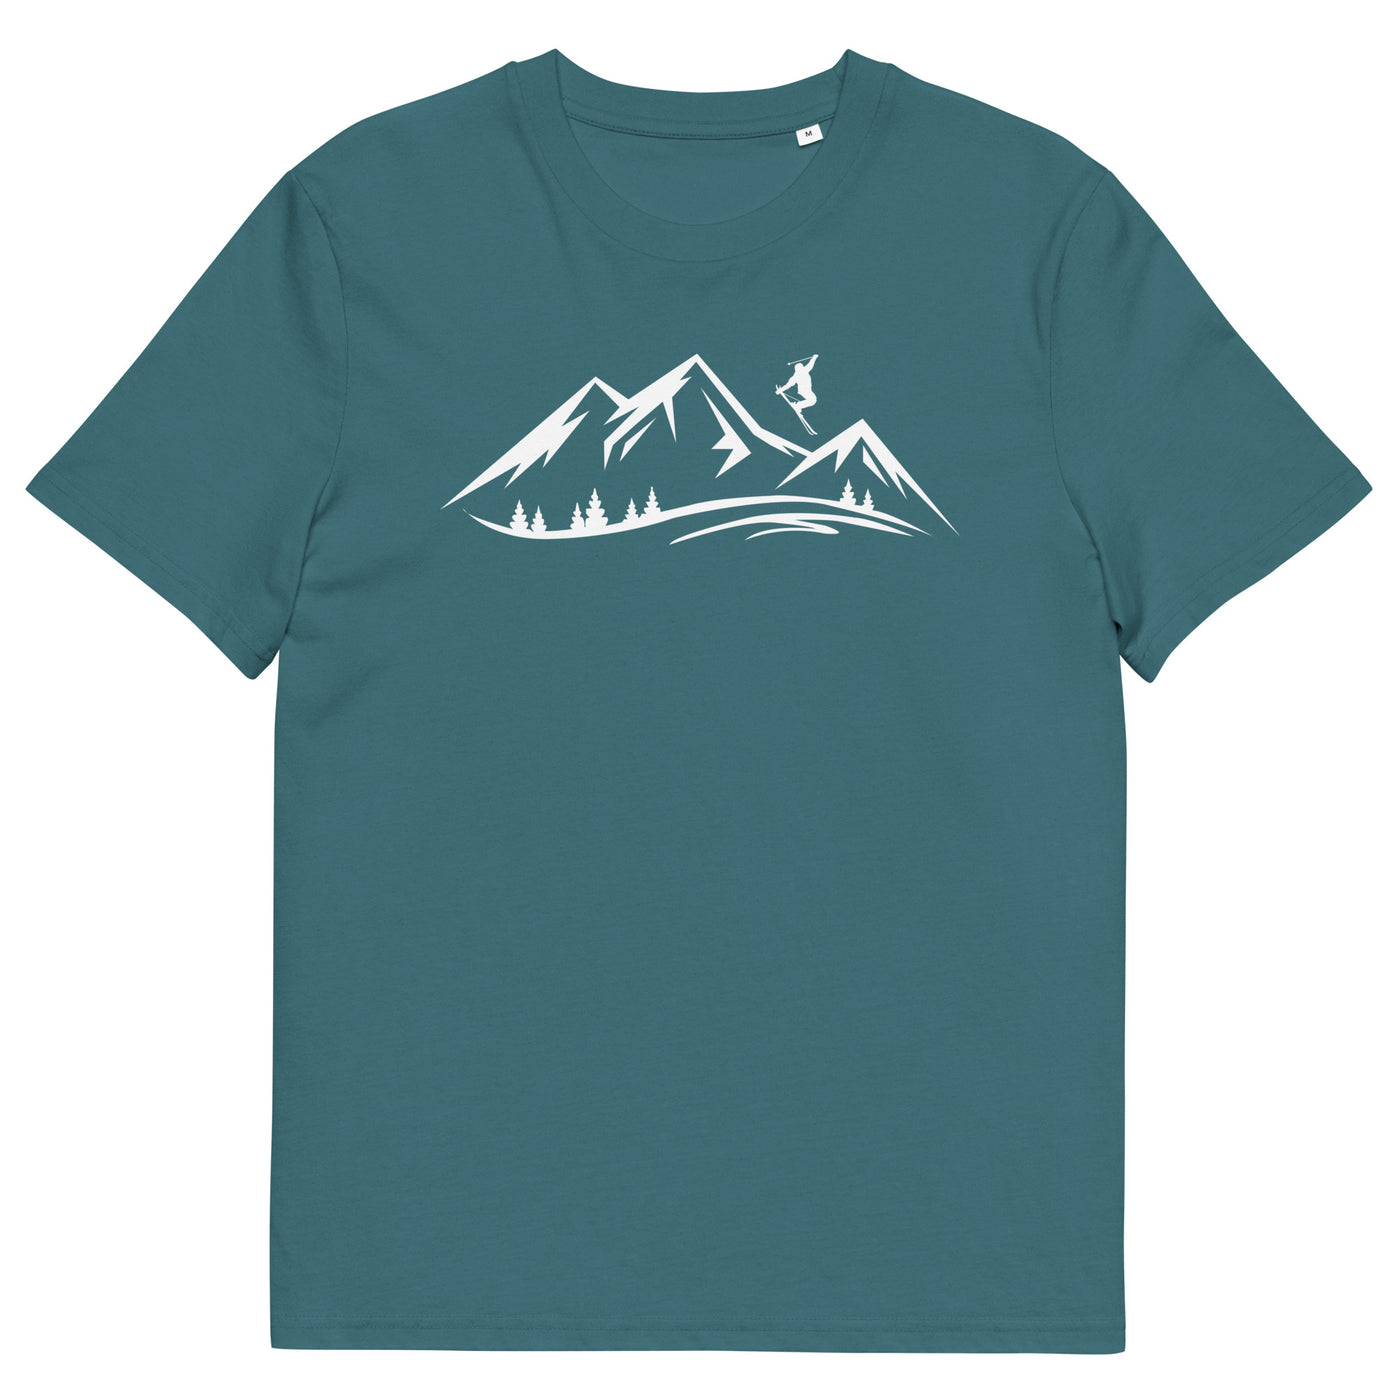 Berge und Skifahren - Herren Premium Organic T-Shirt klettern ski xxx yyy zzz Stargazer